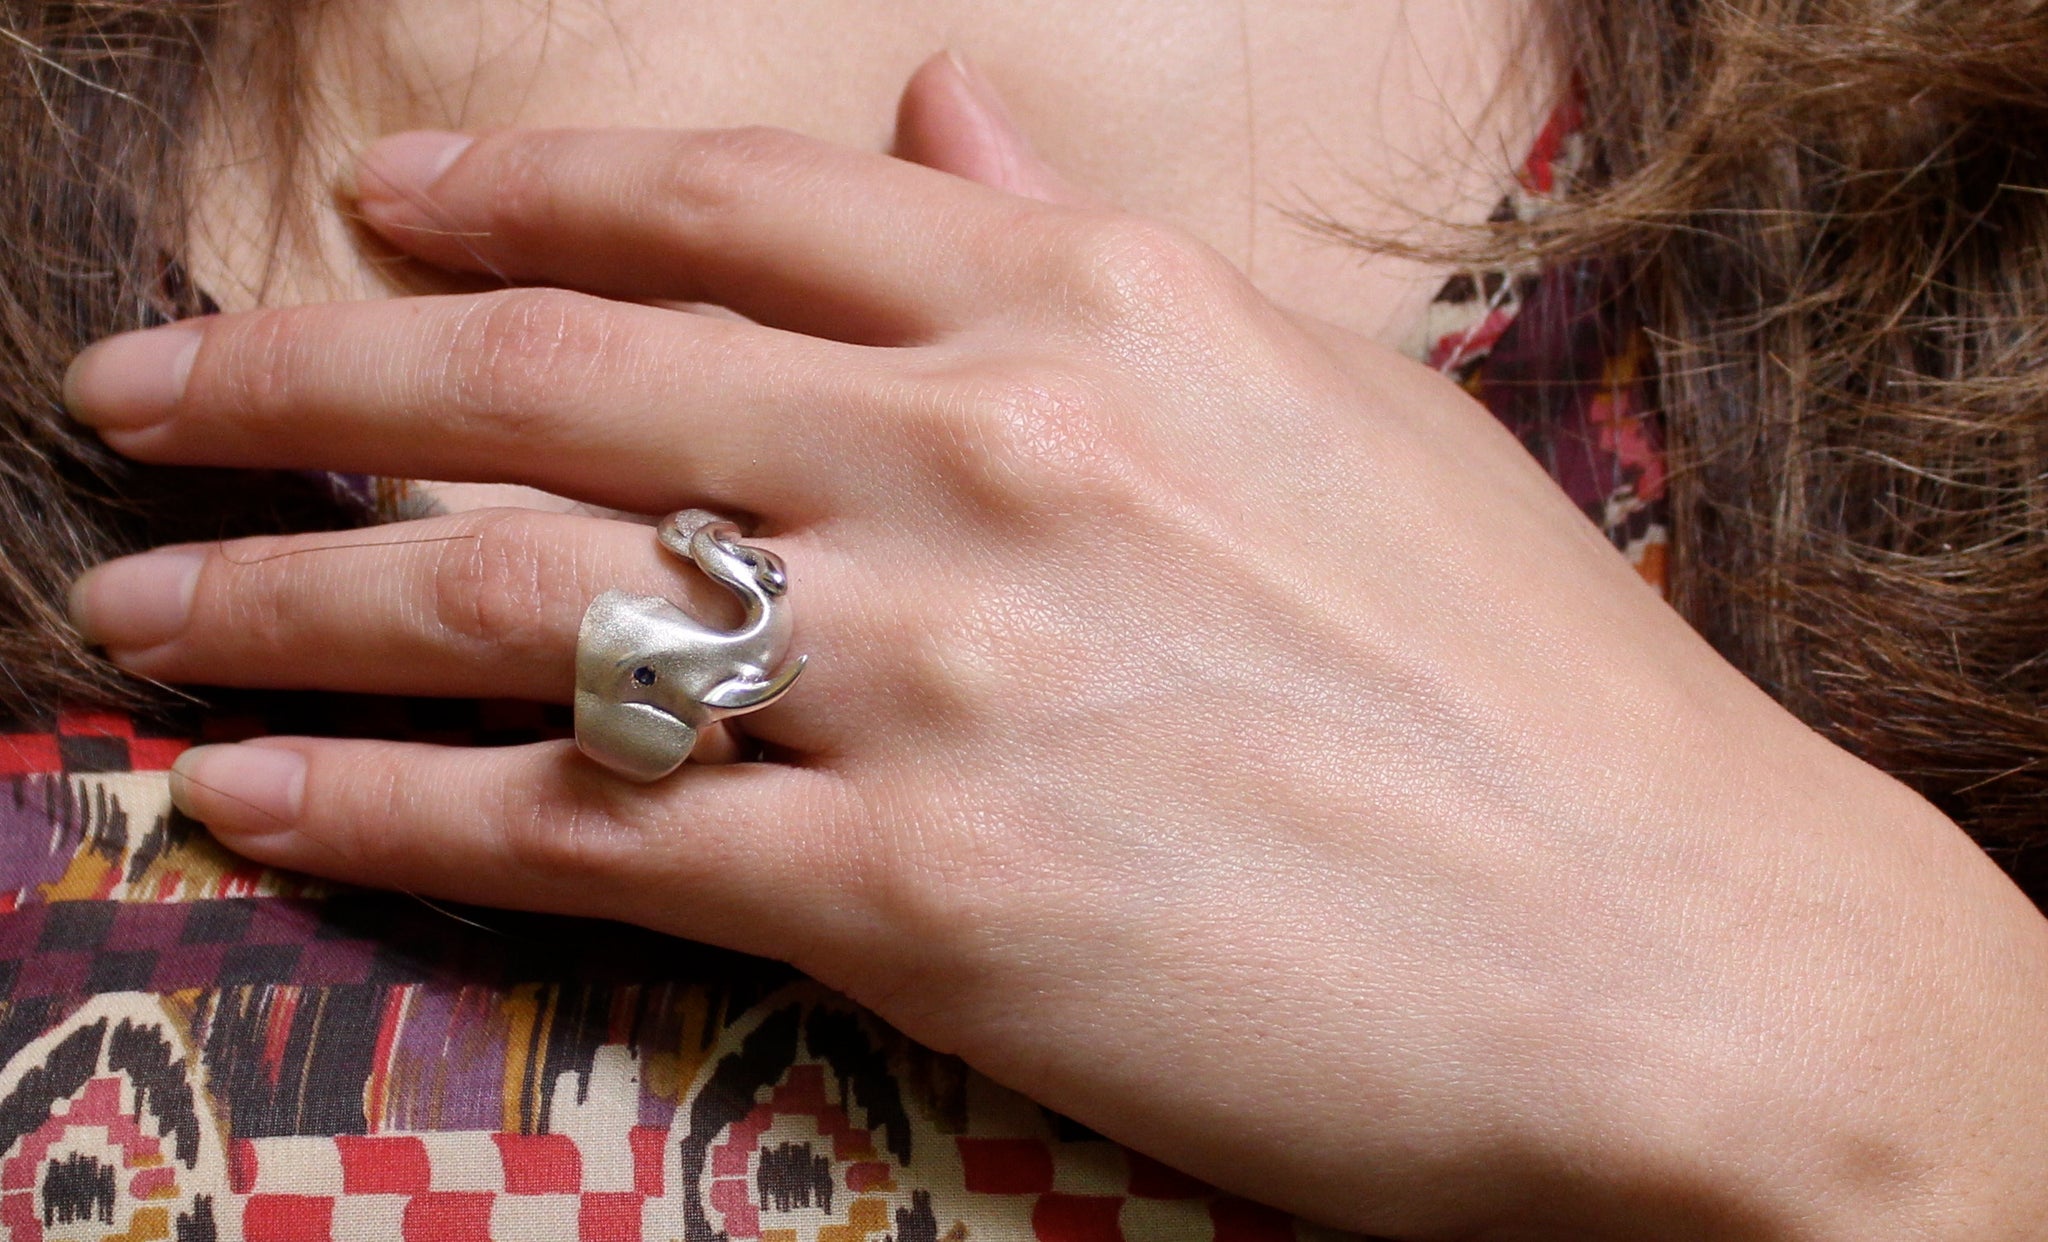 elephant silver ring with gemstone eyes